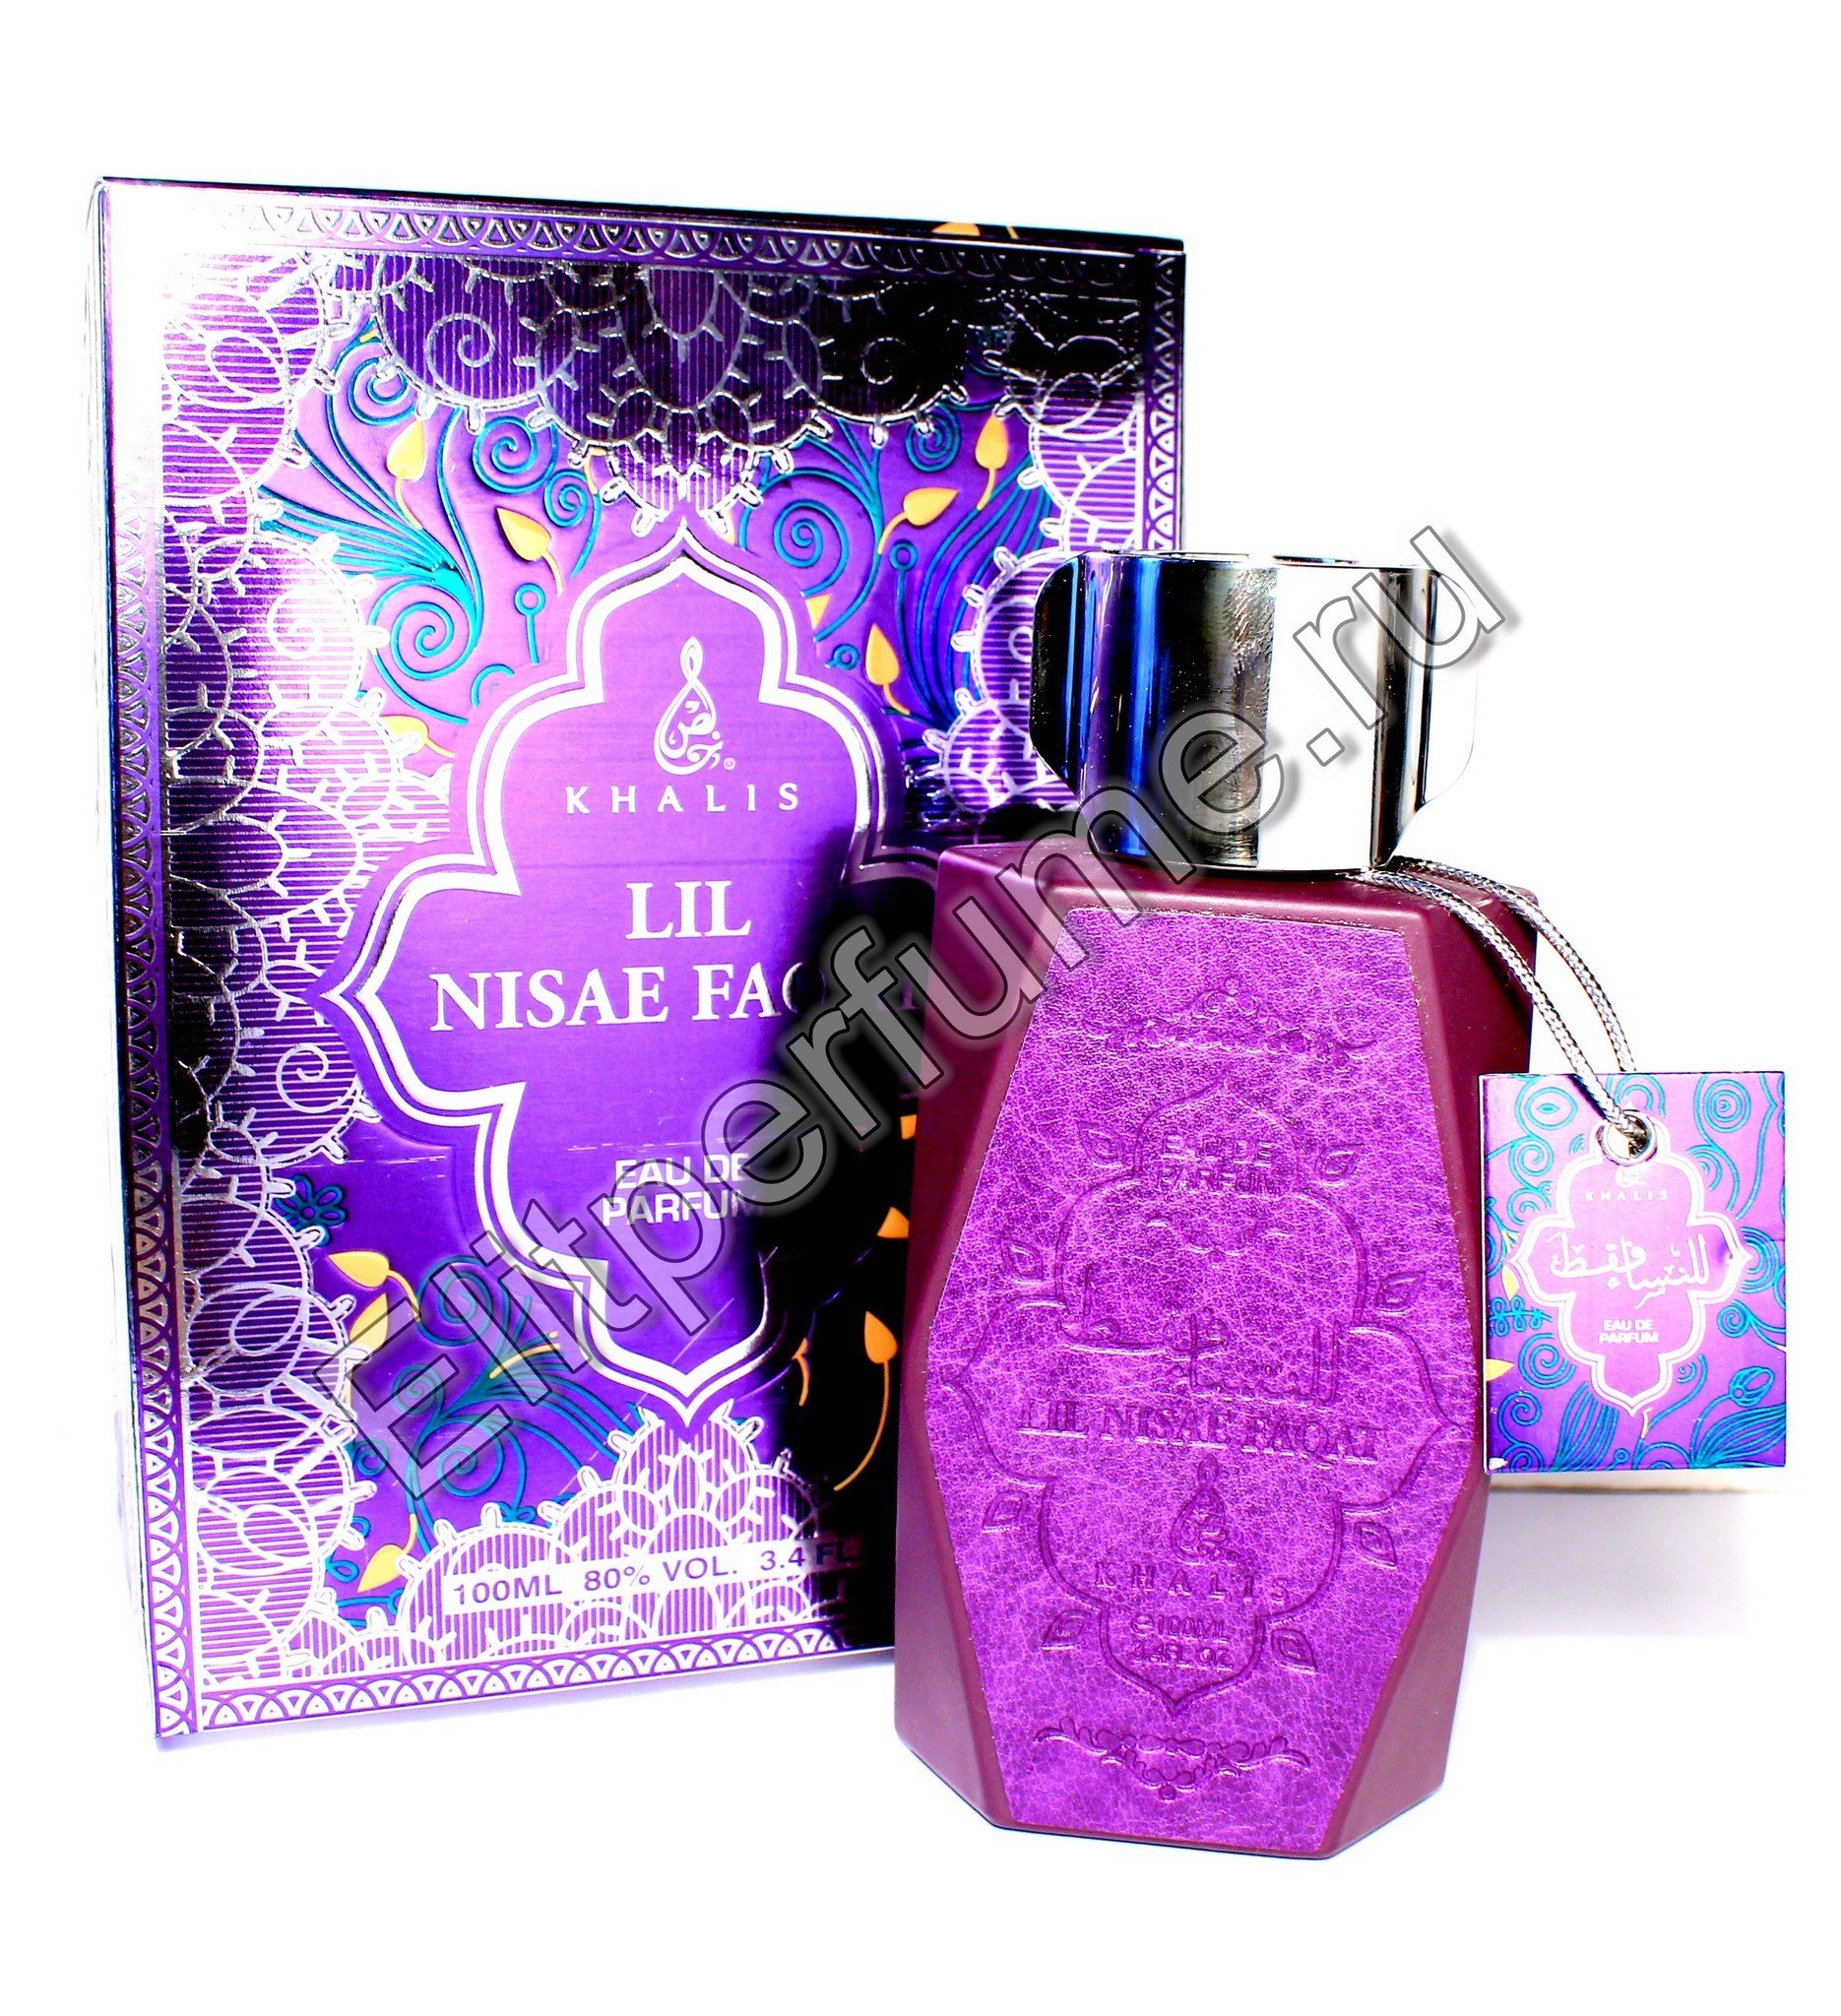 Пробник для Lil Nisae Faqat / Лиль Нисае Факат 1 мл спрей от Халис Khalis Perfumes